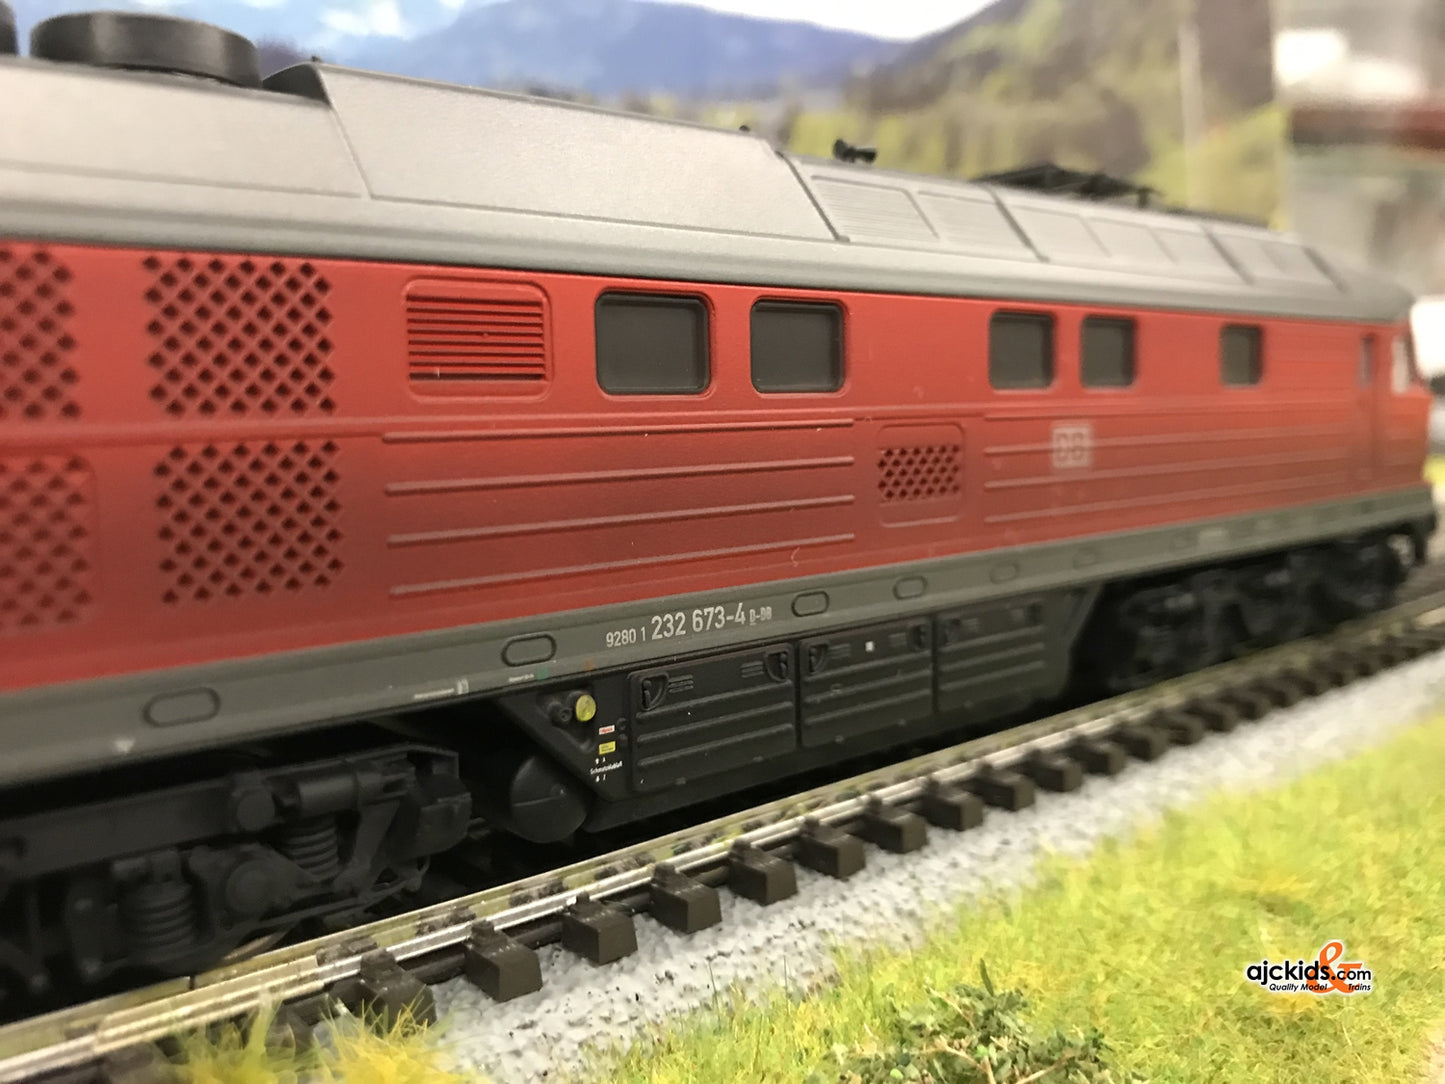 Marklin 36433 - Class 232 Diesel Locomotive - Limited Release